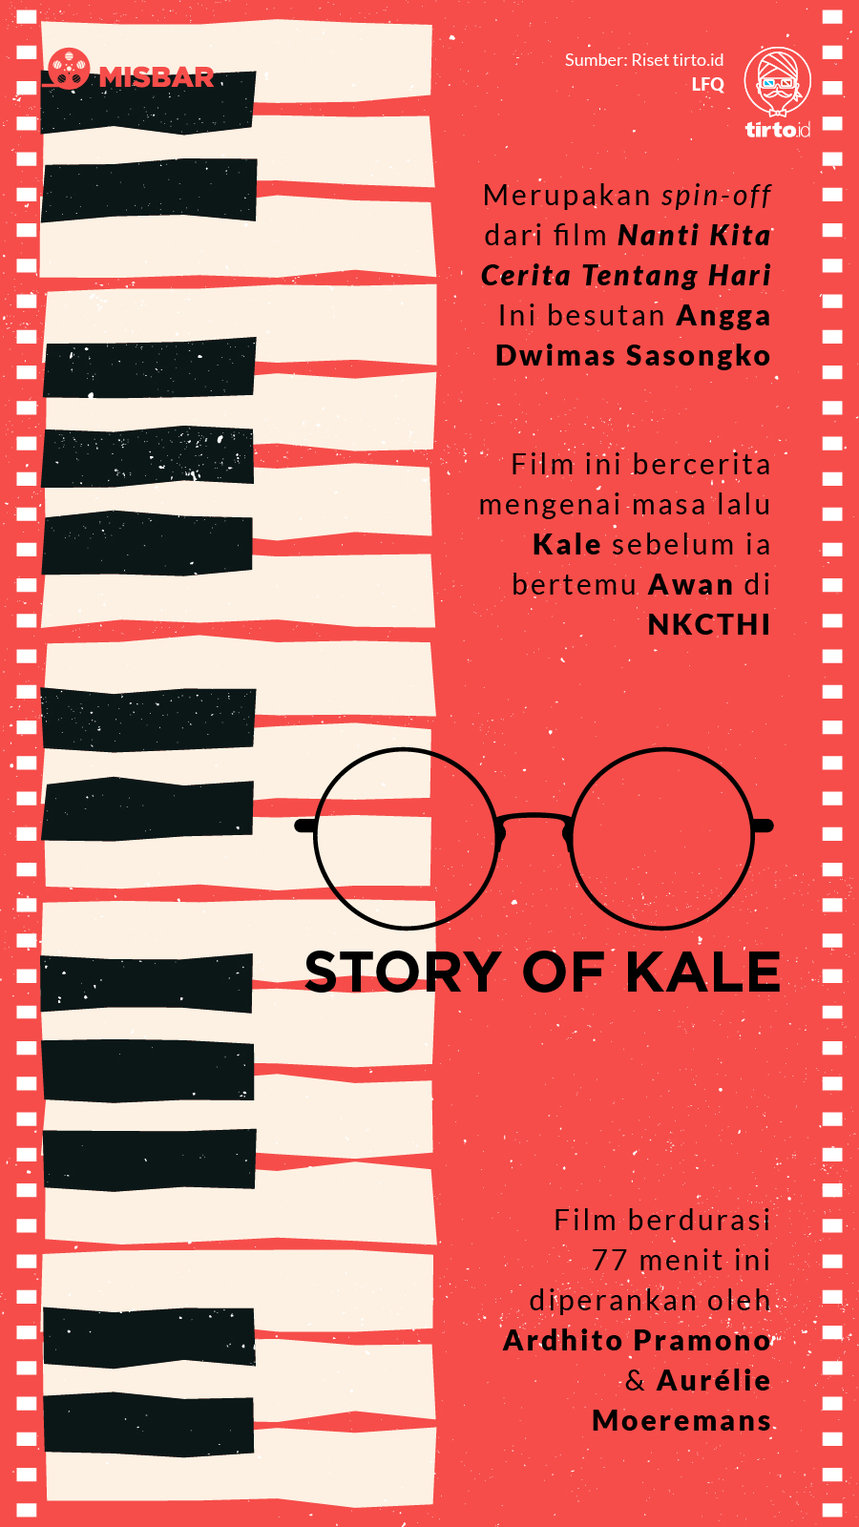 Infografik Misbar Story of Kale